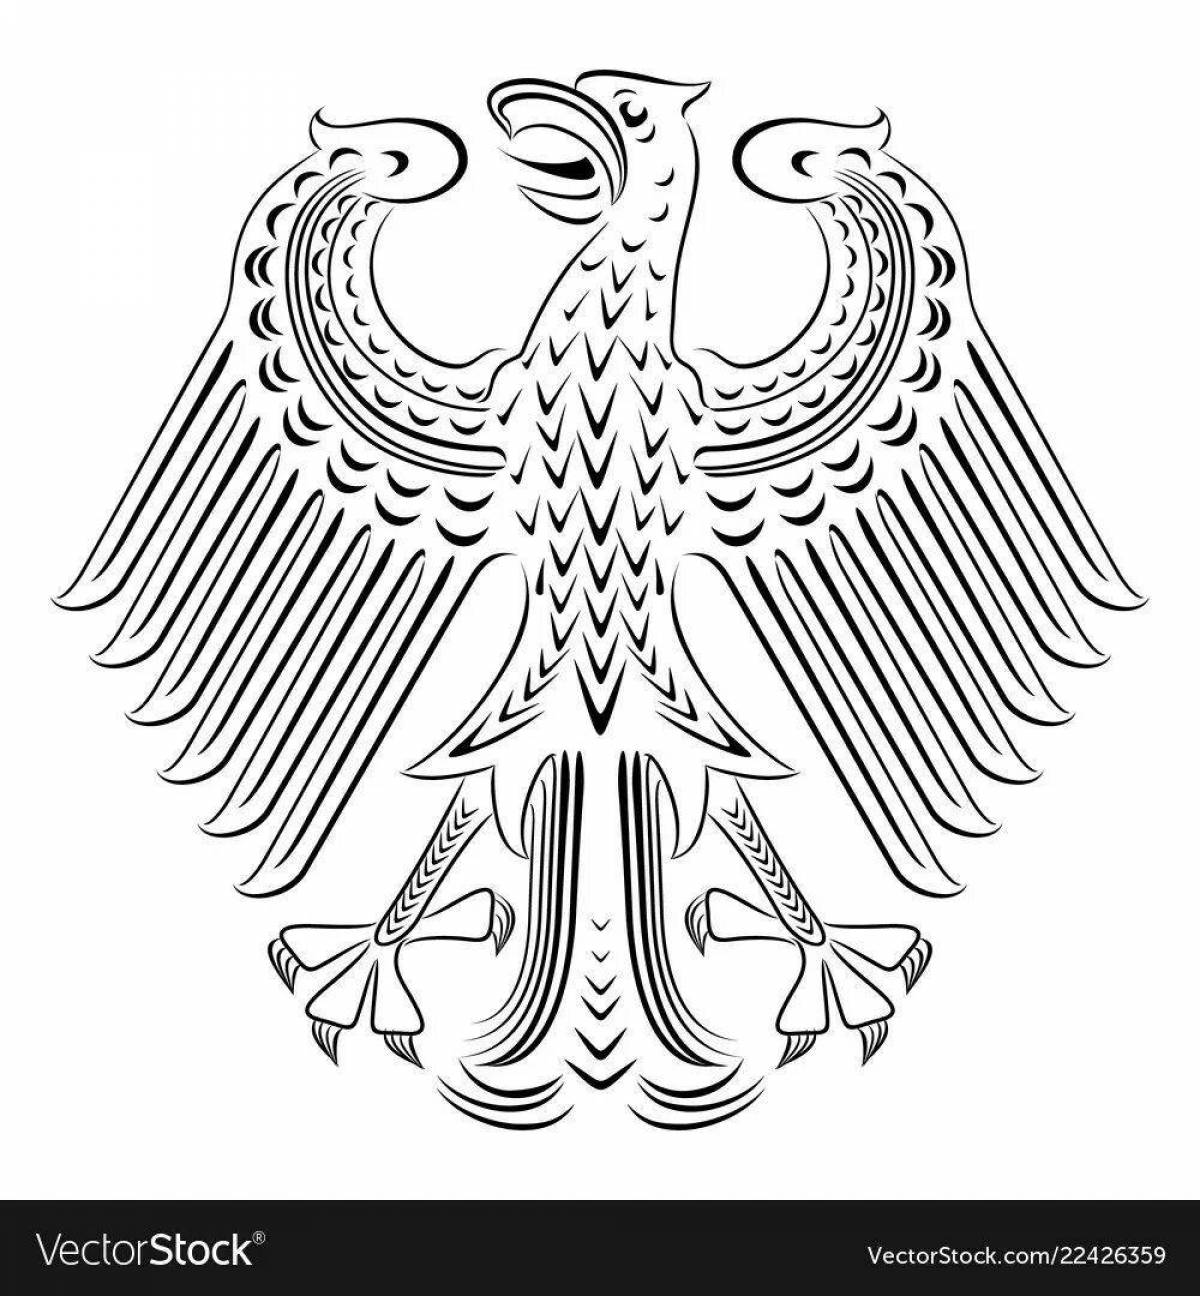 German coat of arms #4